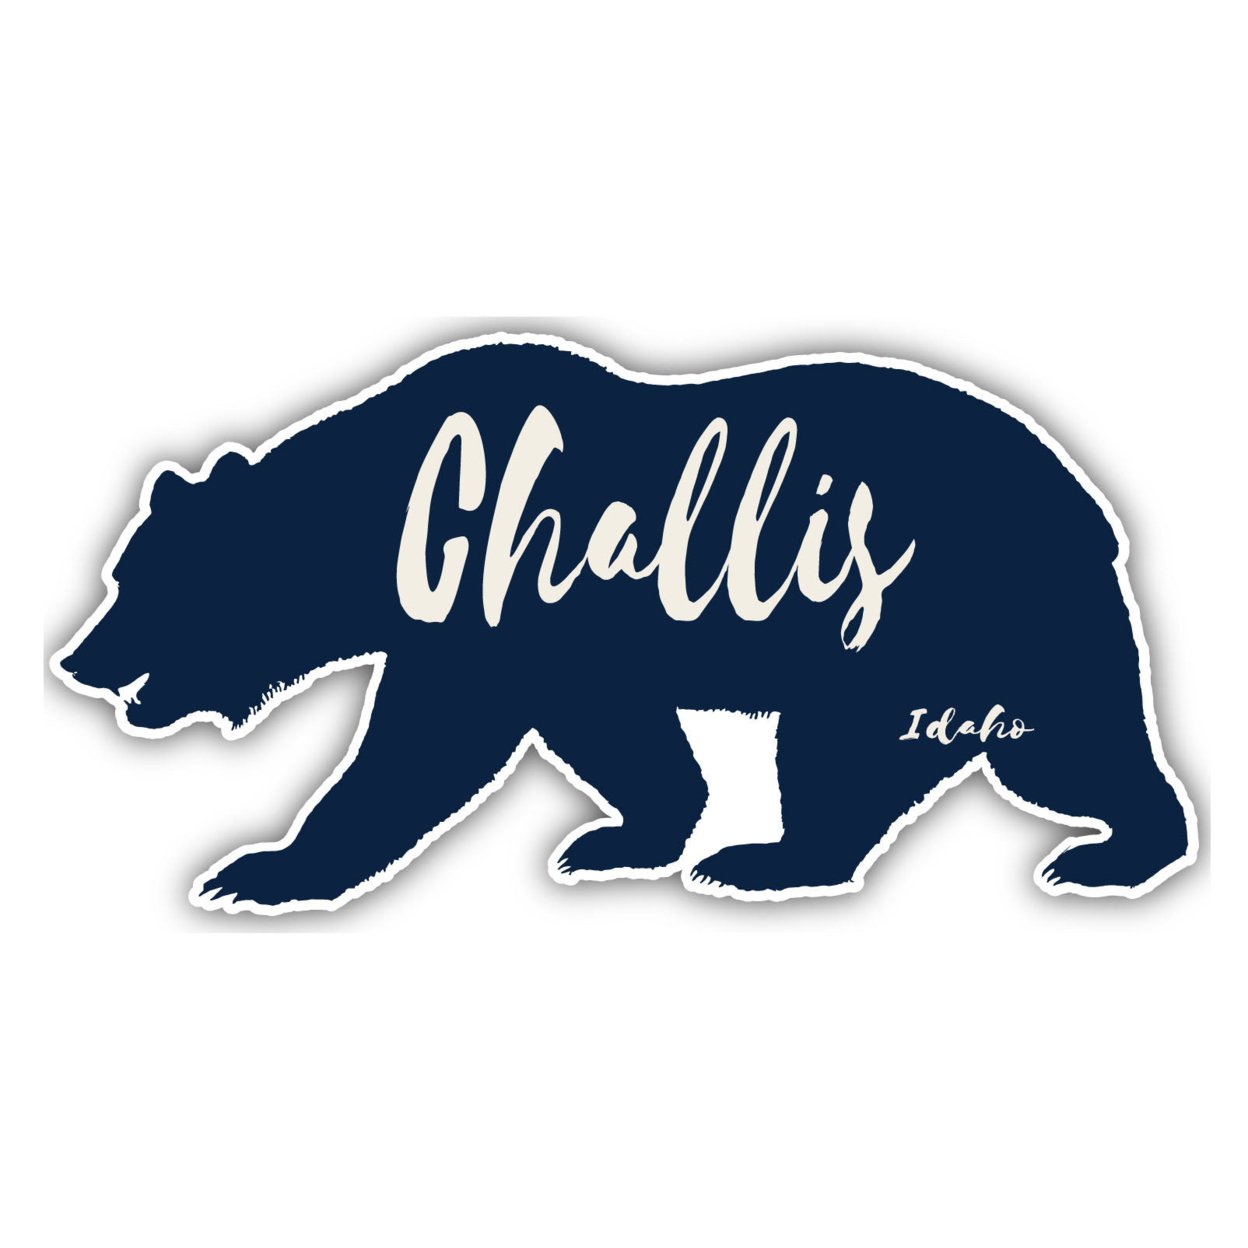 Challis Idaho Souvenir Decorative Stickers (Choose Theme And Size) - Single Unit, 2-Inch, Tent